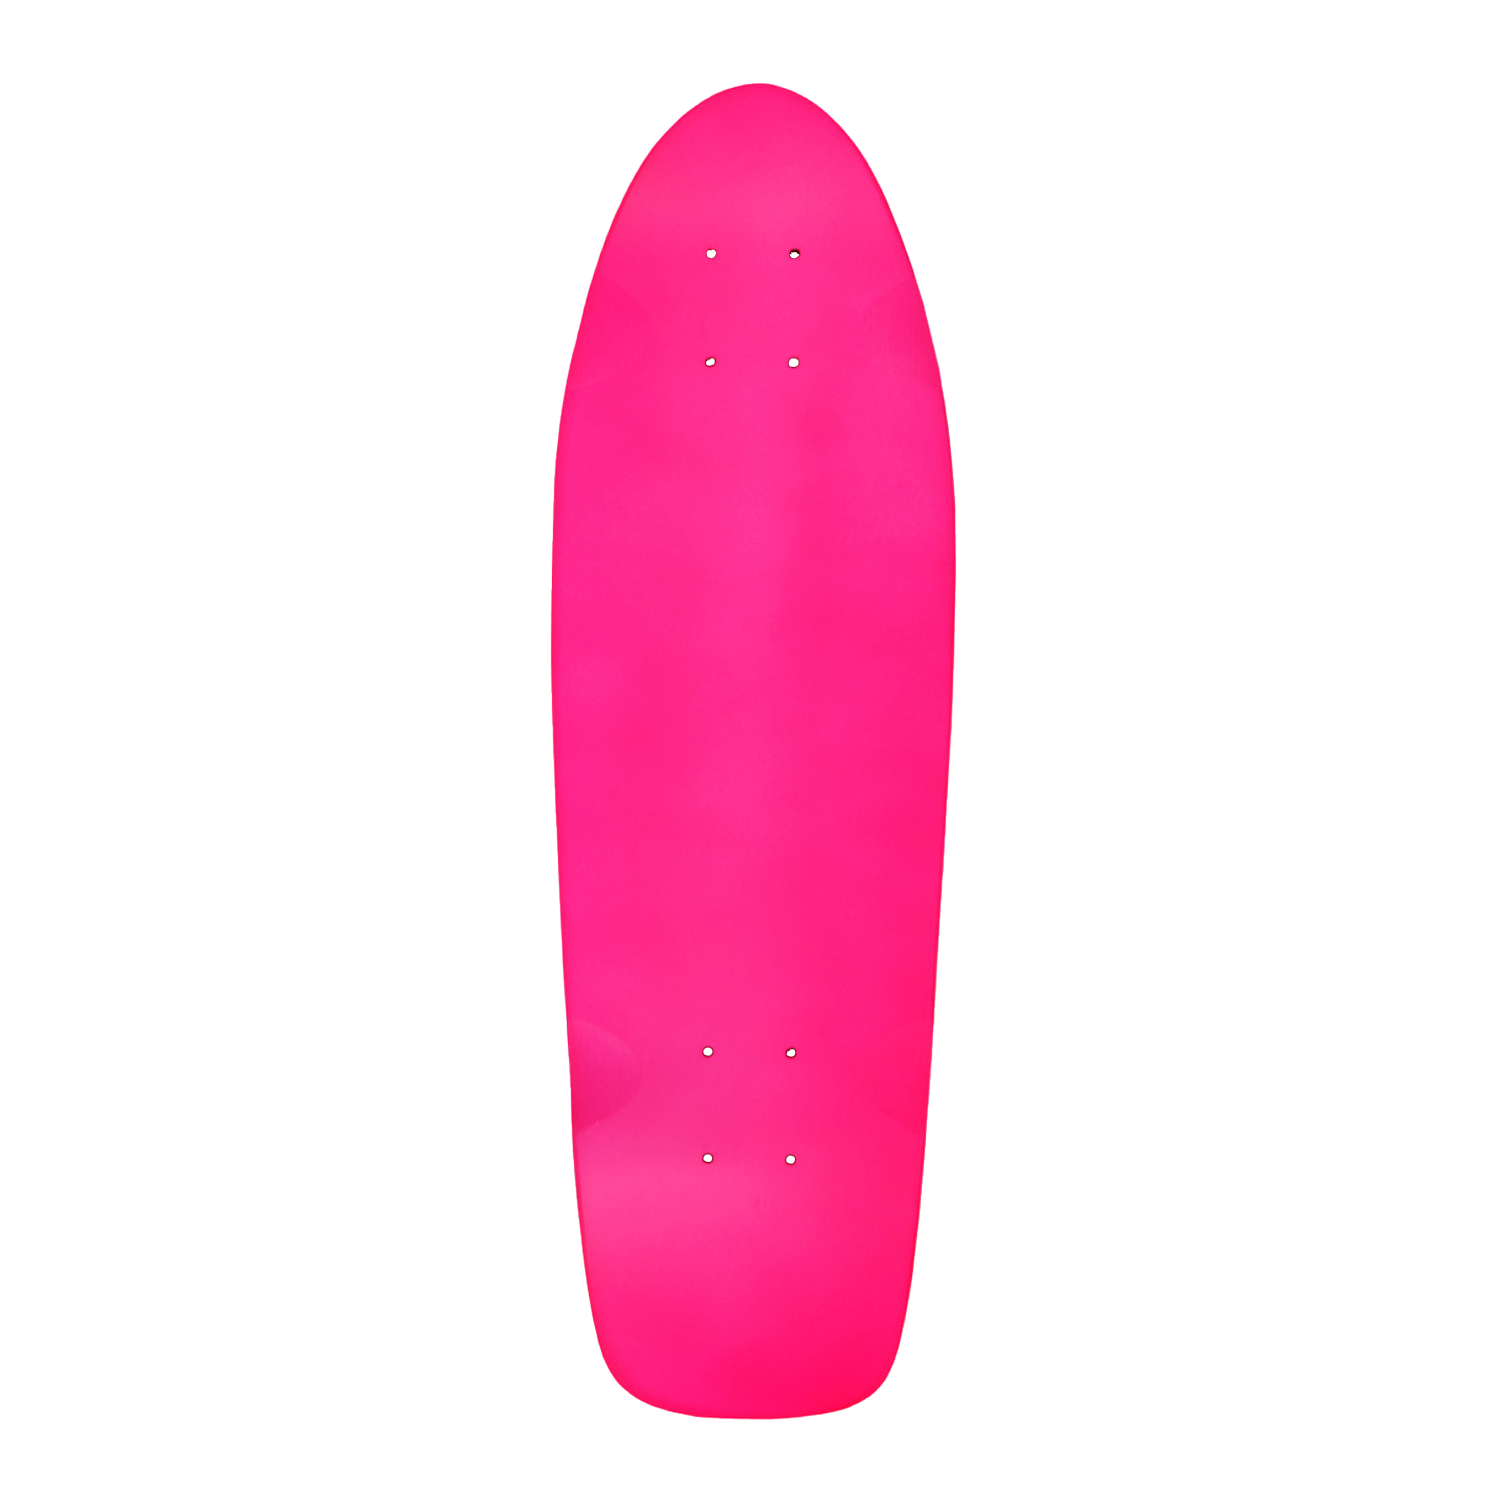 Moose Skateboard Cruiser Deck Neon Pink 8in x 26.5in